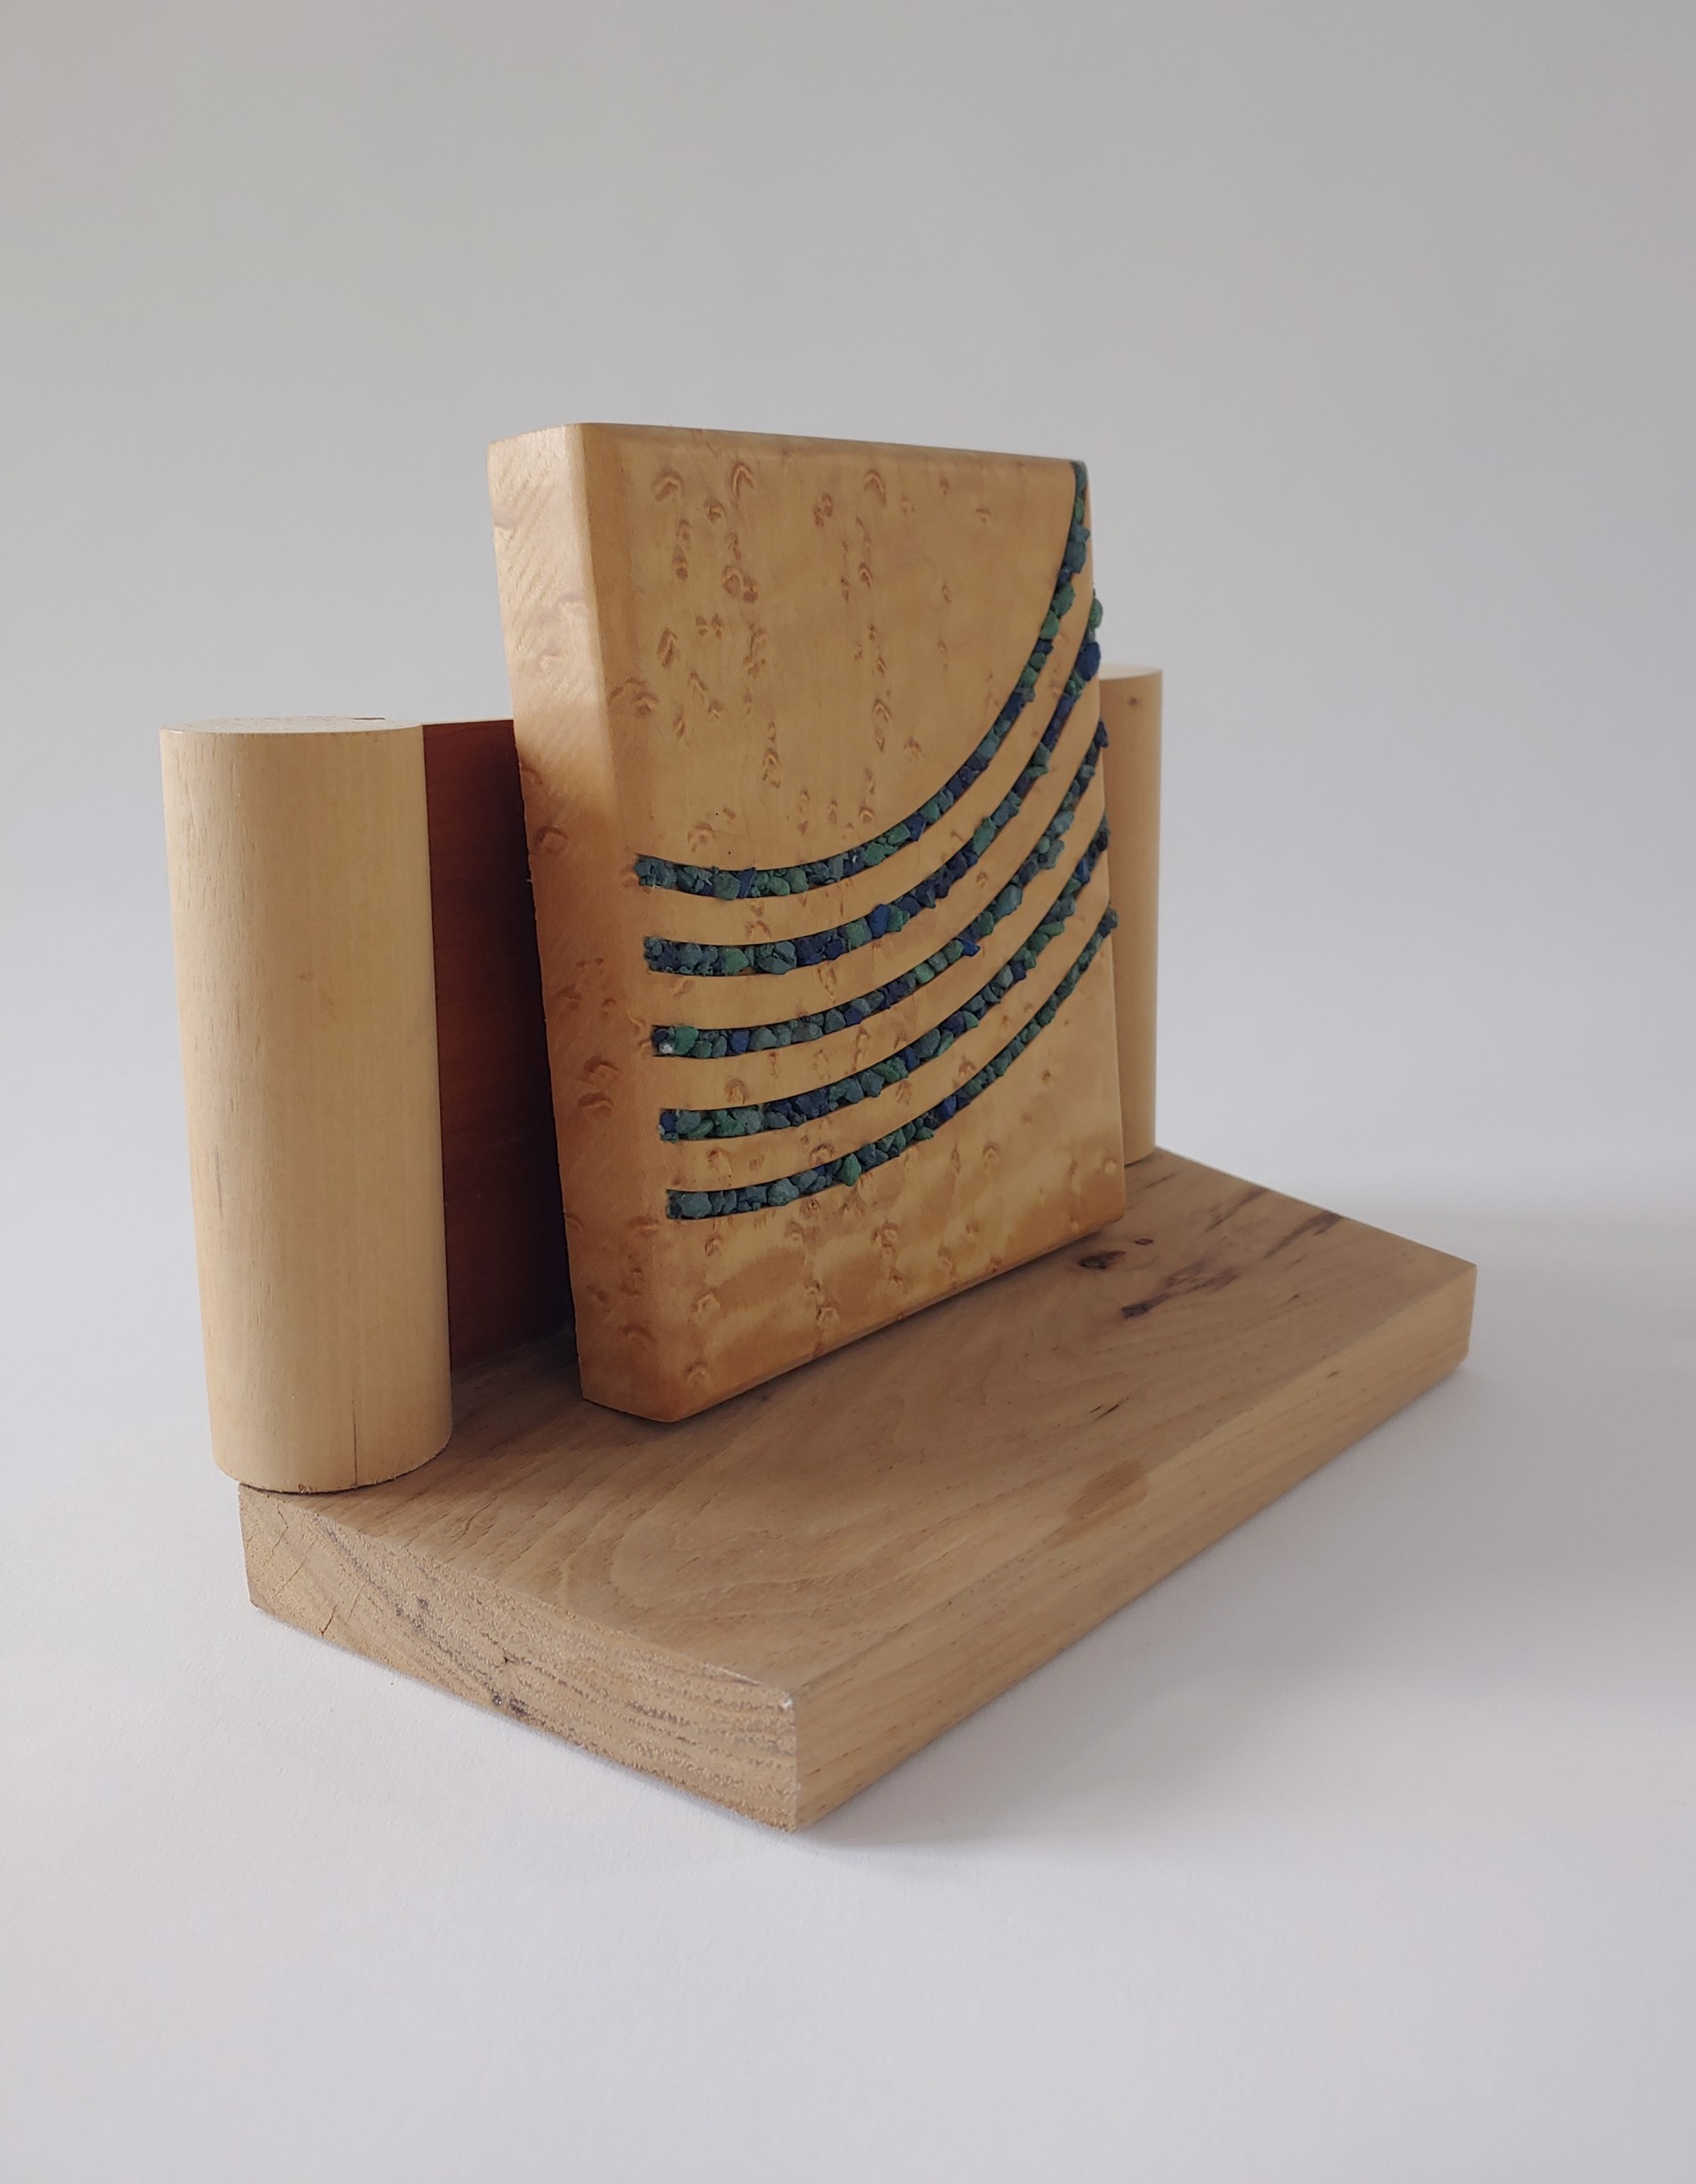 Concurrent Fragment - Wood Sculpture by David Amdur